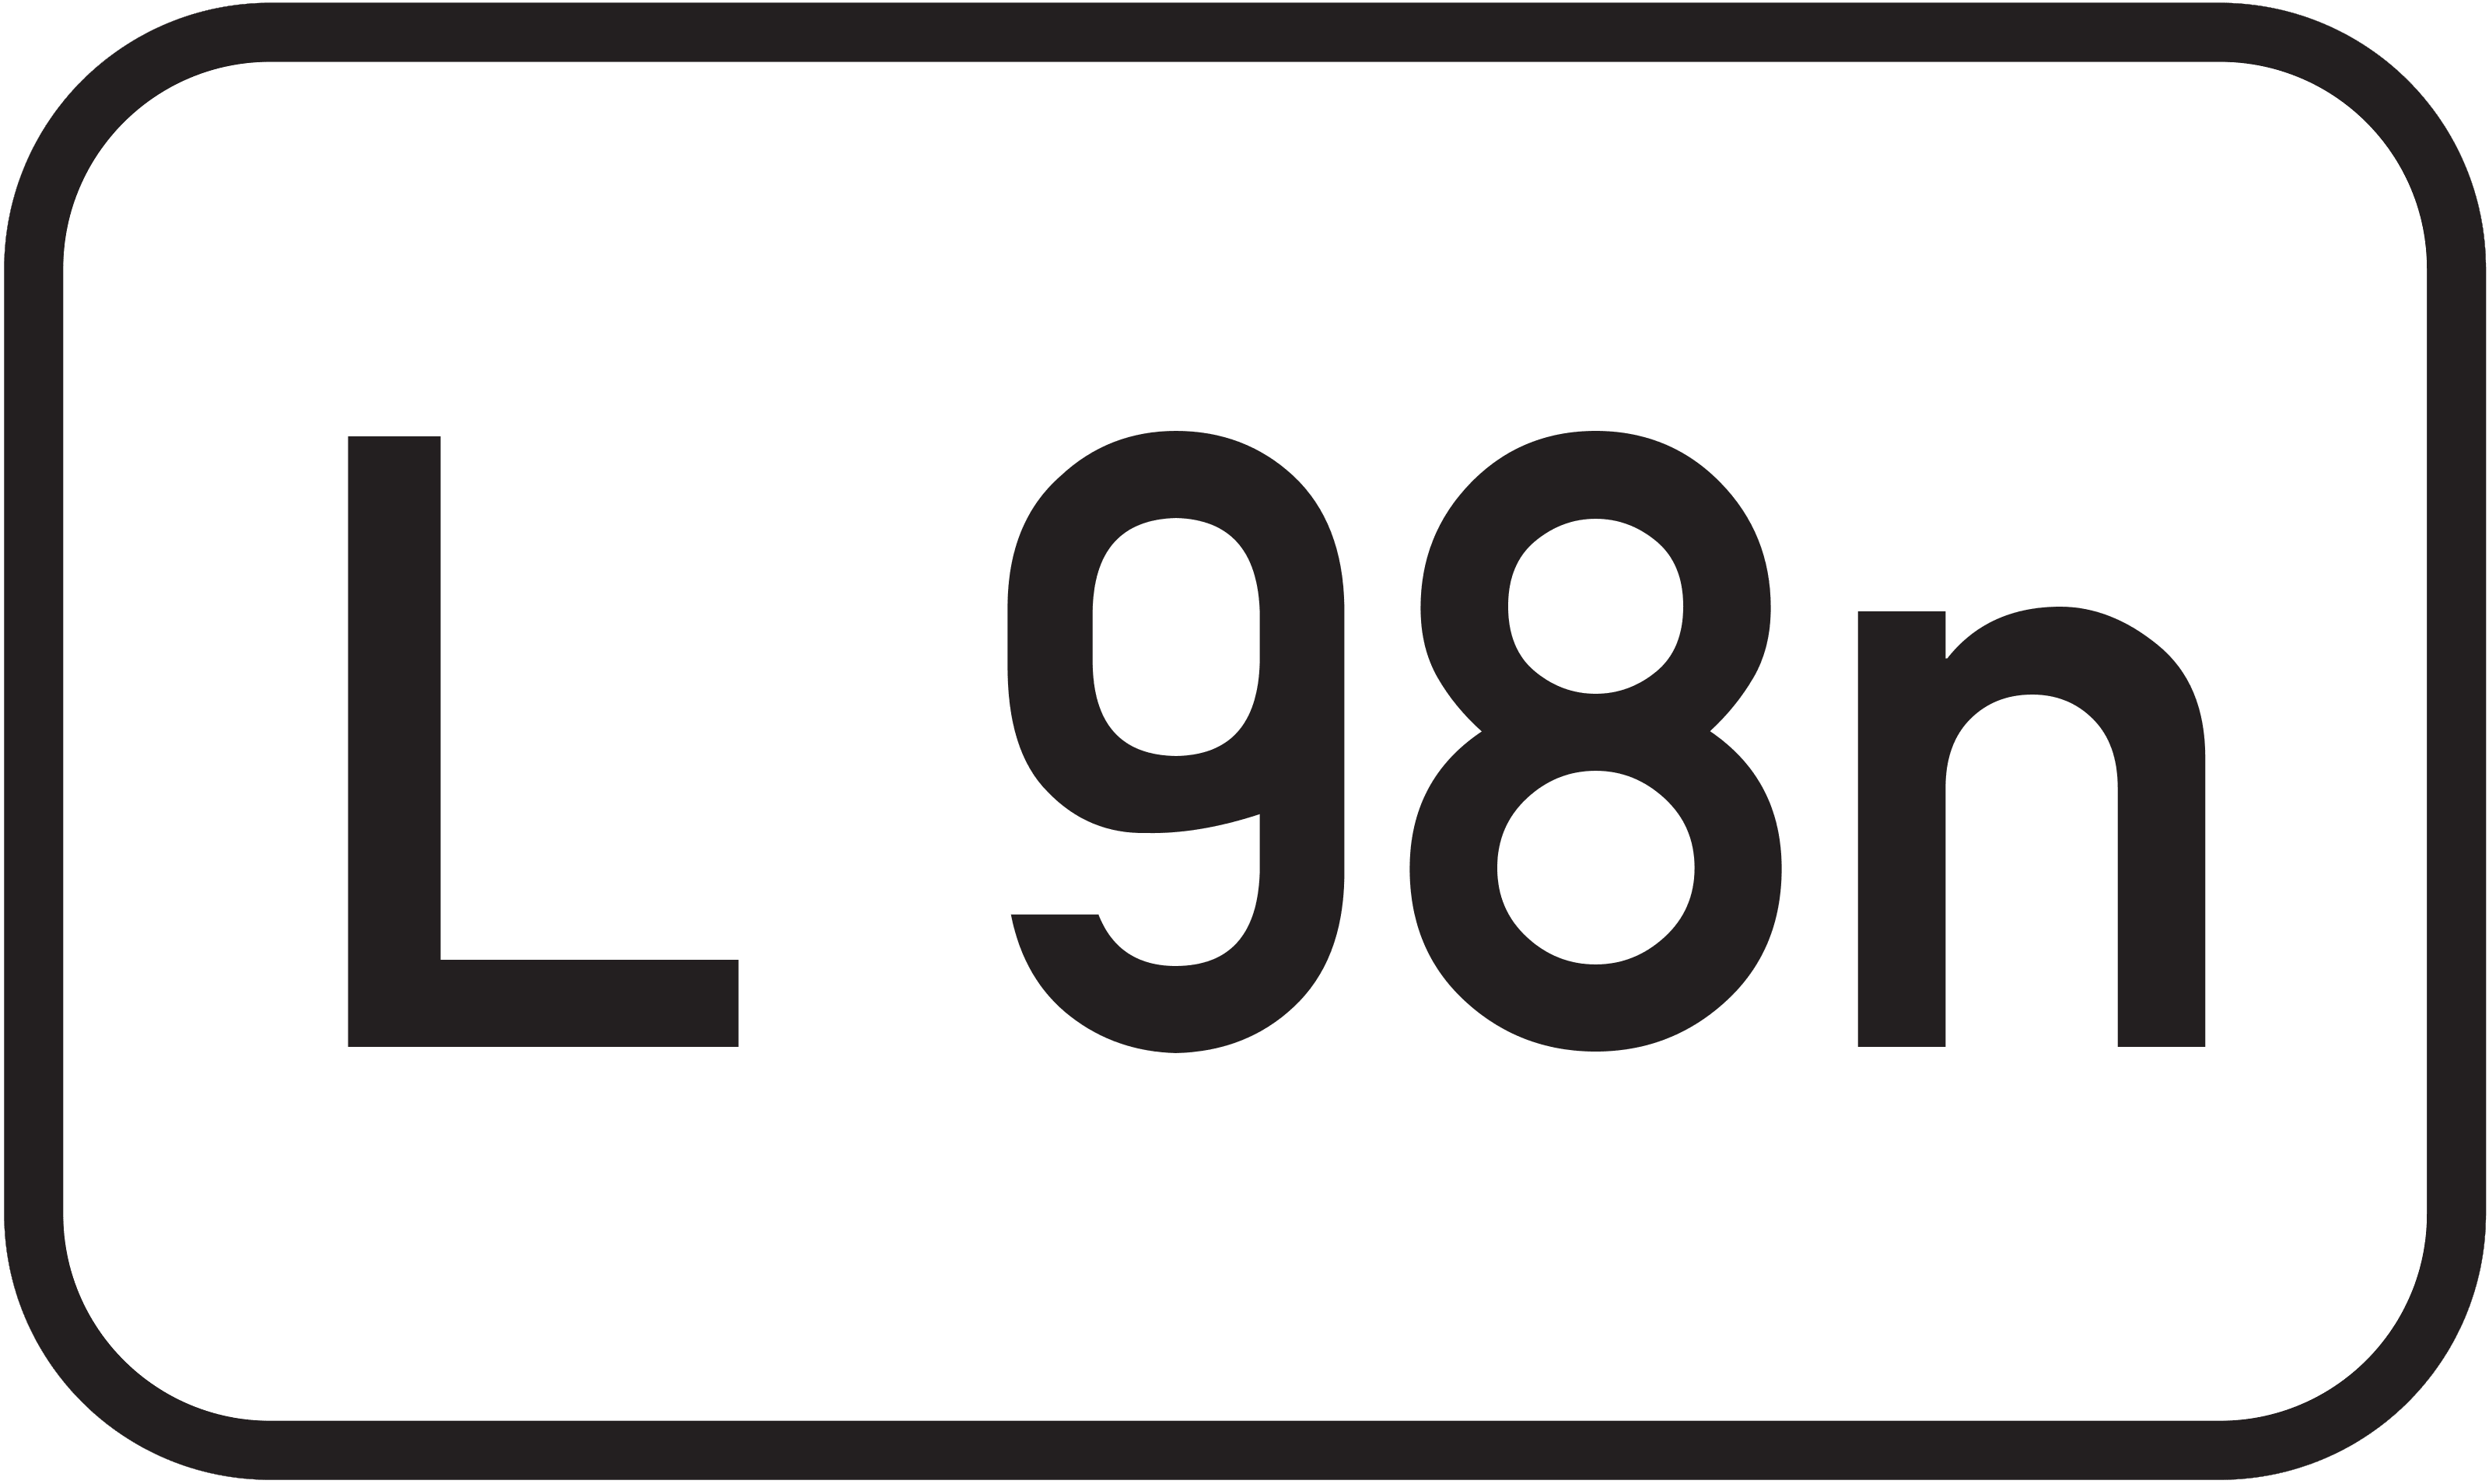 Straßenschild Landesstraße L 98n